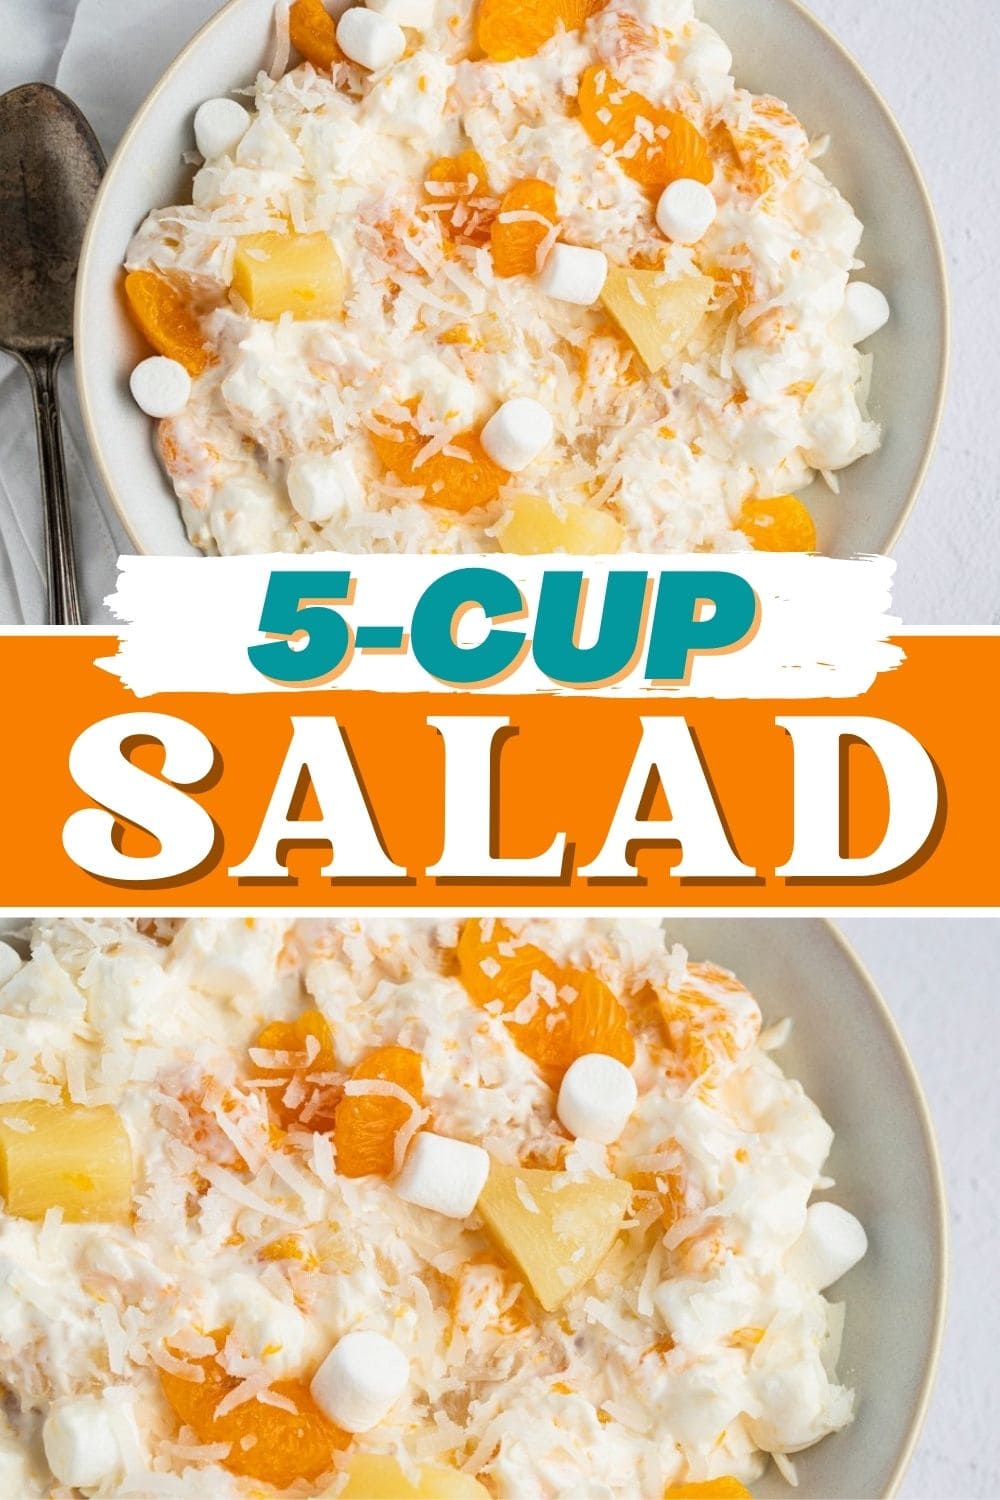 5-Cup Salad